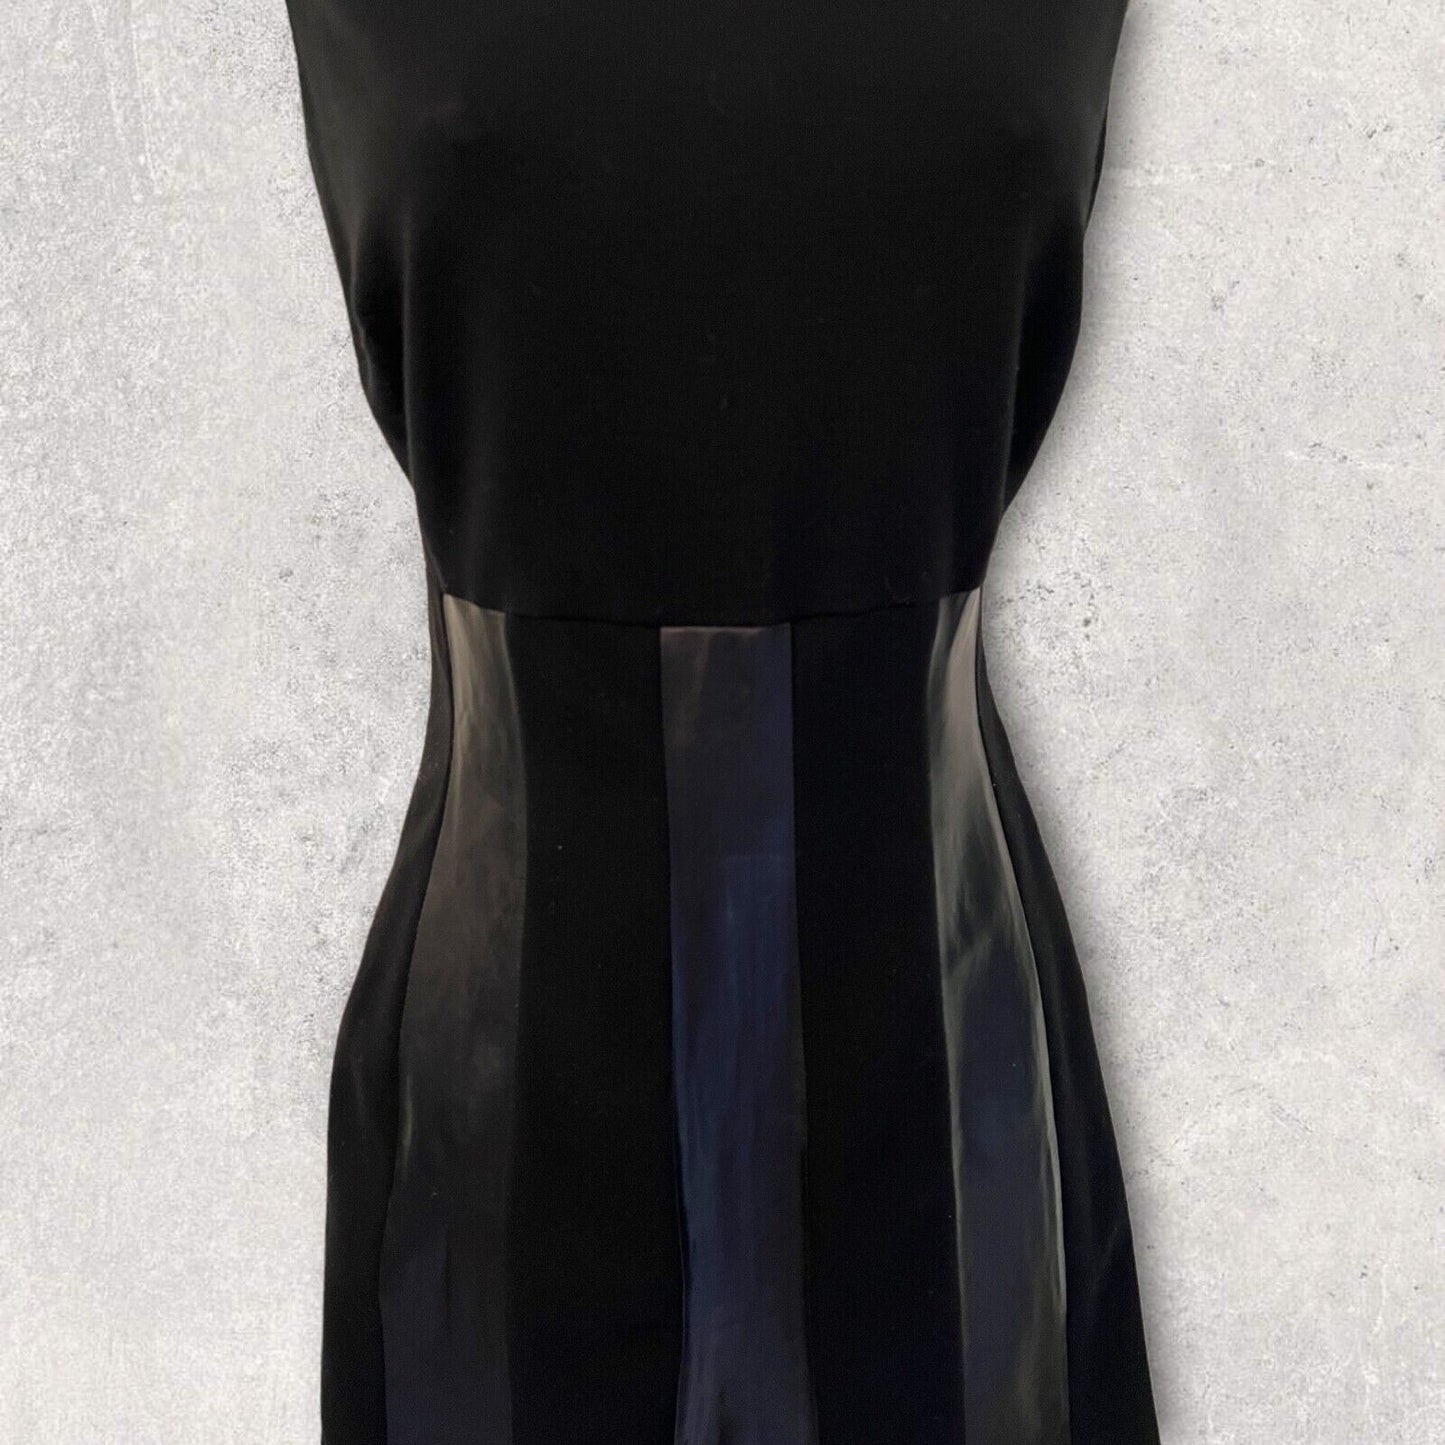 Diane von Furstenberg Womens Black Ellie Leather Dress UK 10 US 6 EU 38 Timeless Fashions